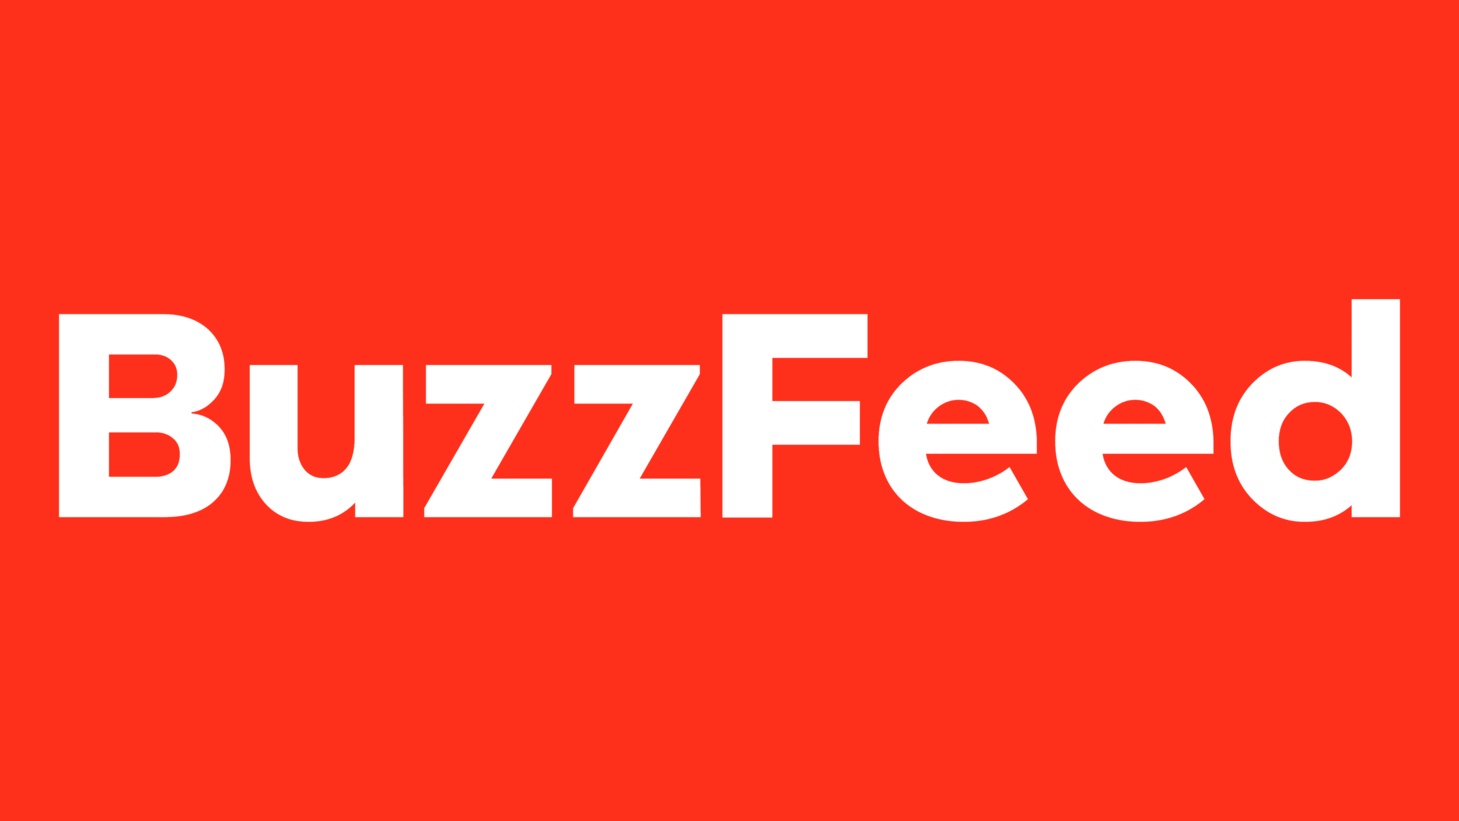 Buzzfeed symbol